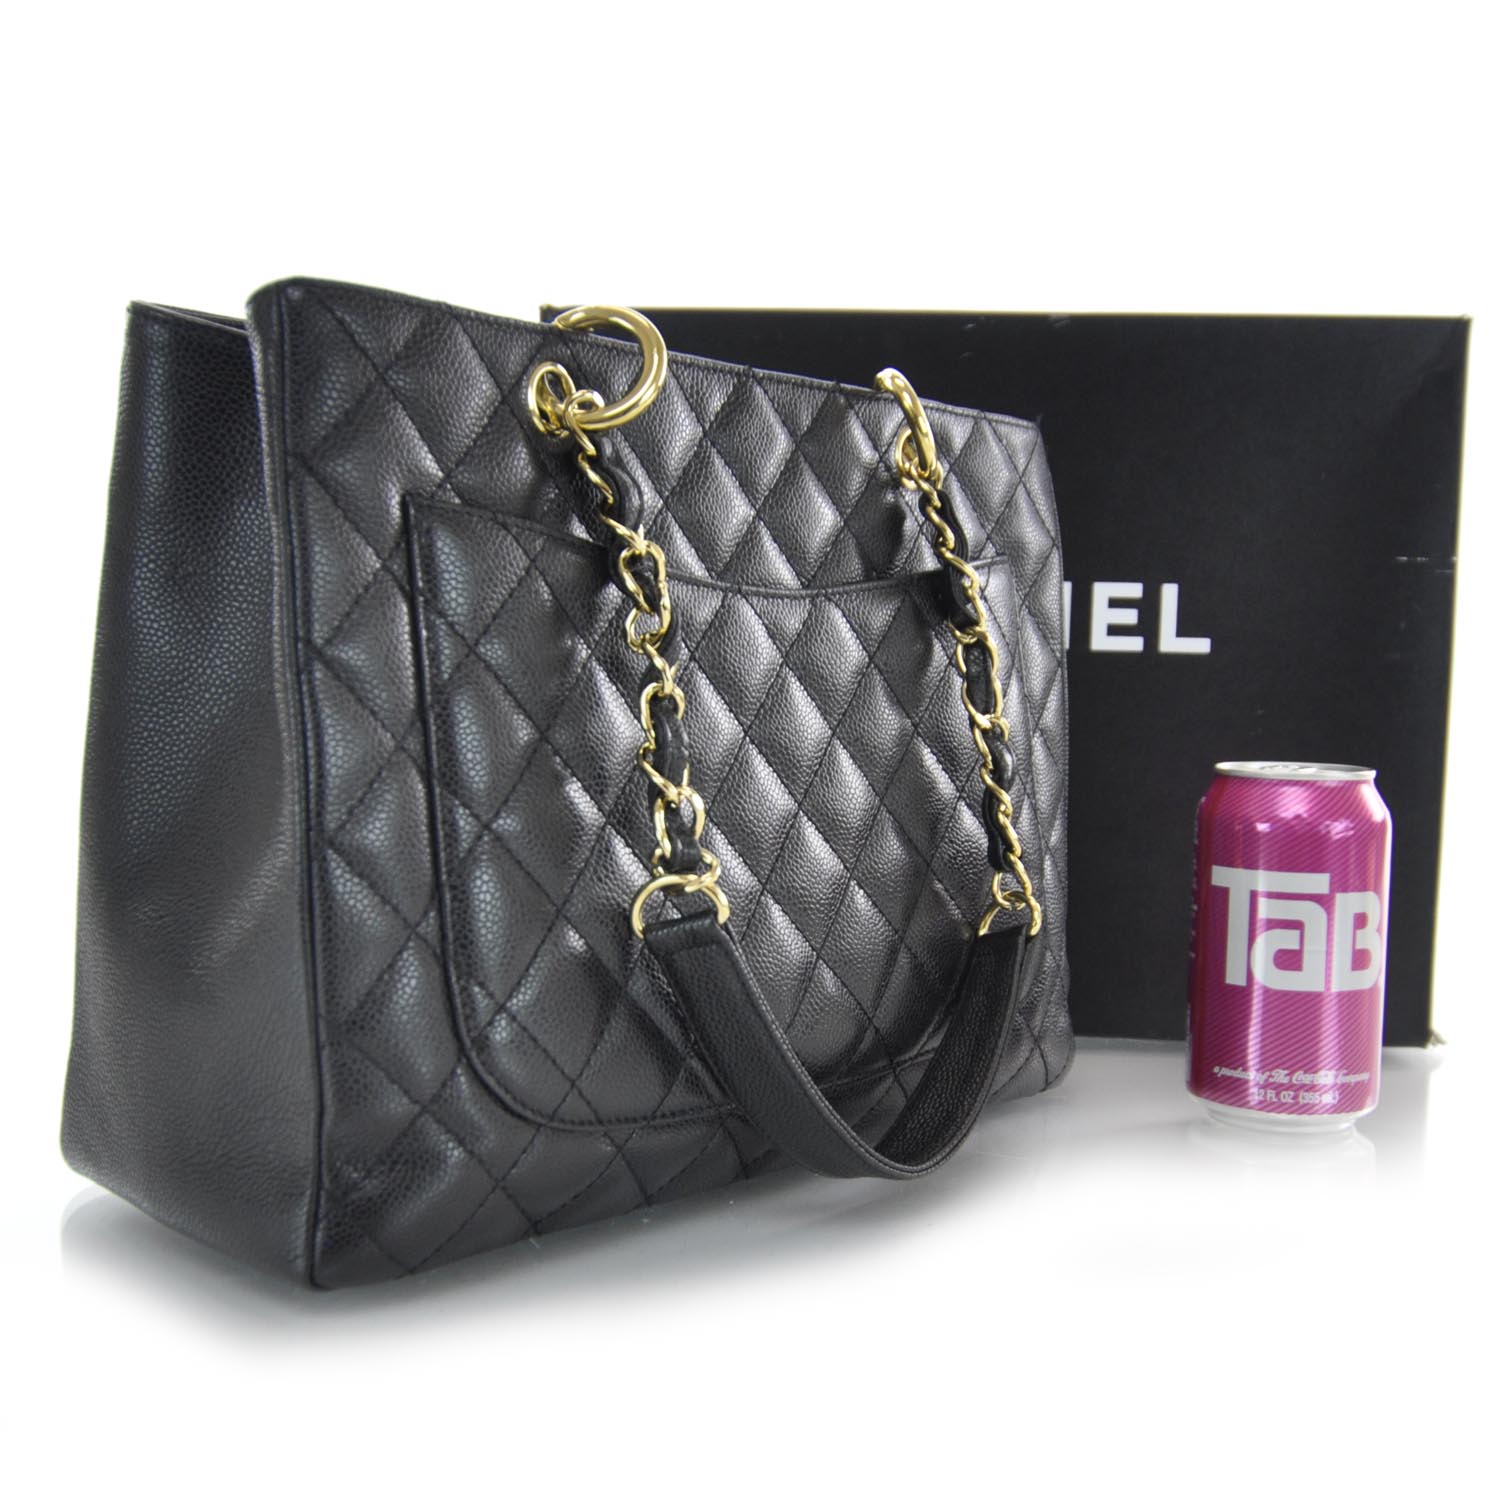 Chanel Handbag Neiman Marcus